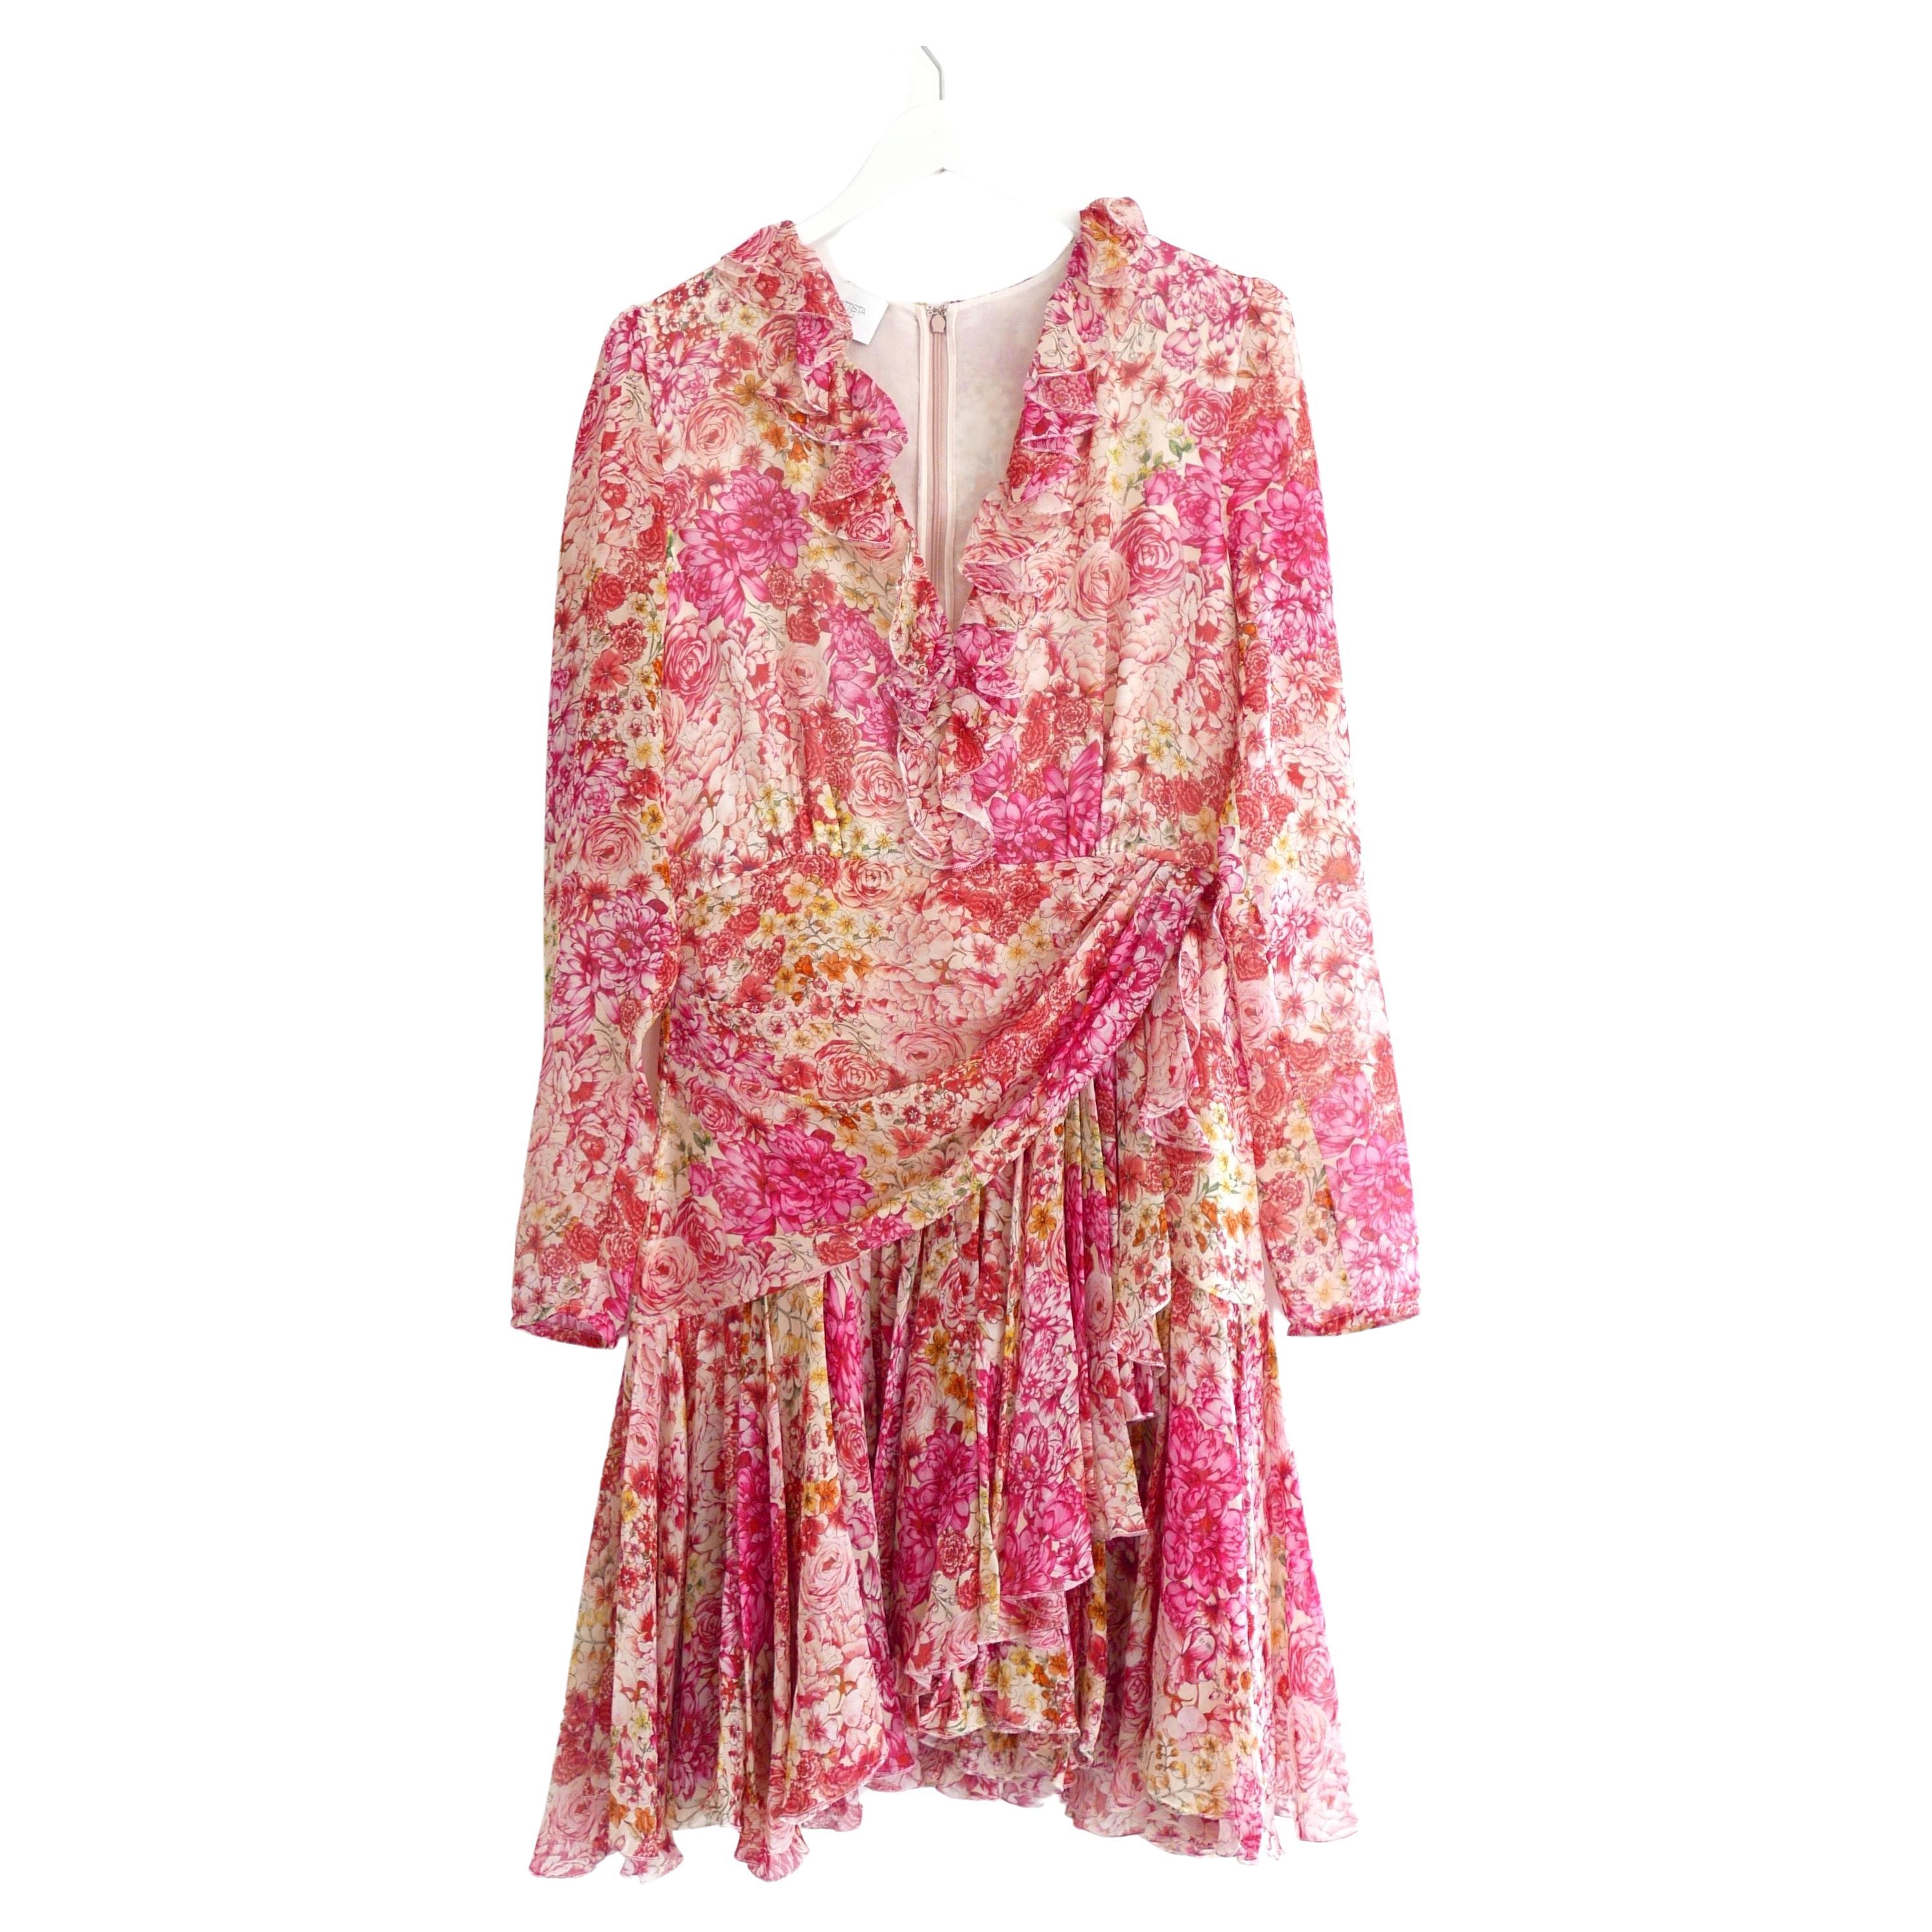 Giambattista Valli Spring 2019  Floral Silk Dress  For Sale